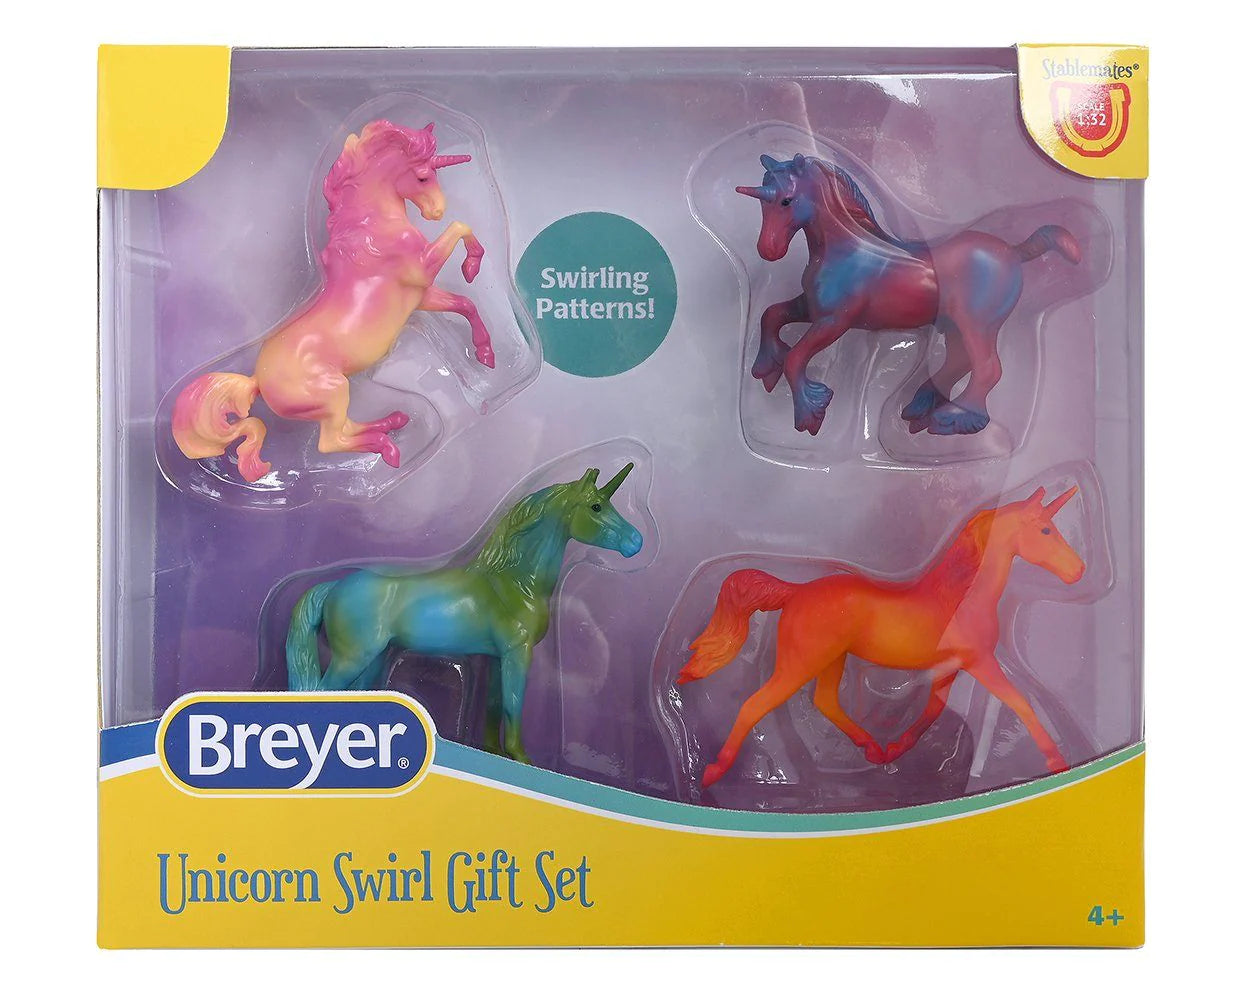 Unicorn Swirl Gift Set